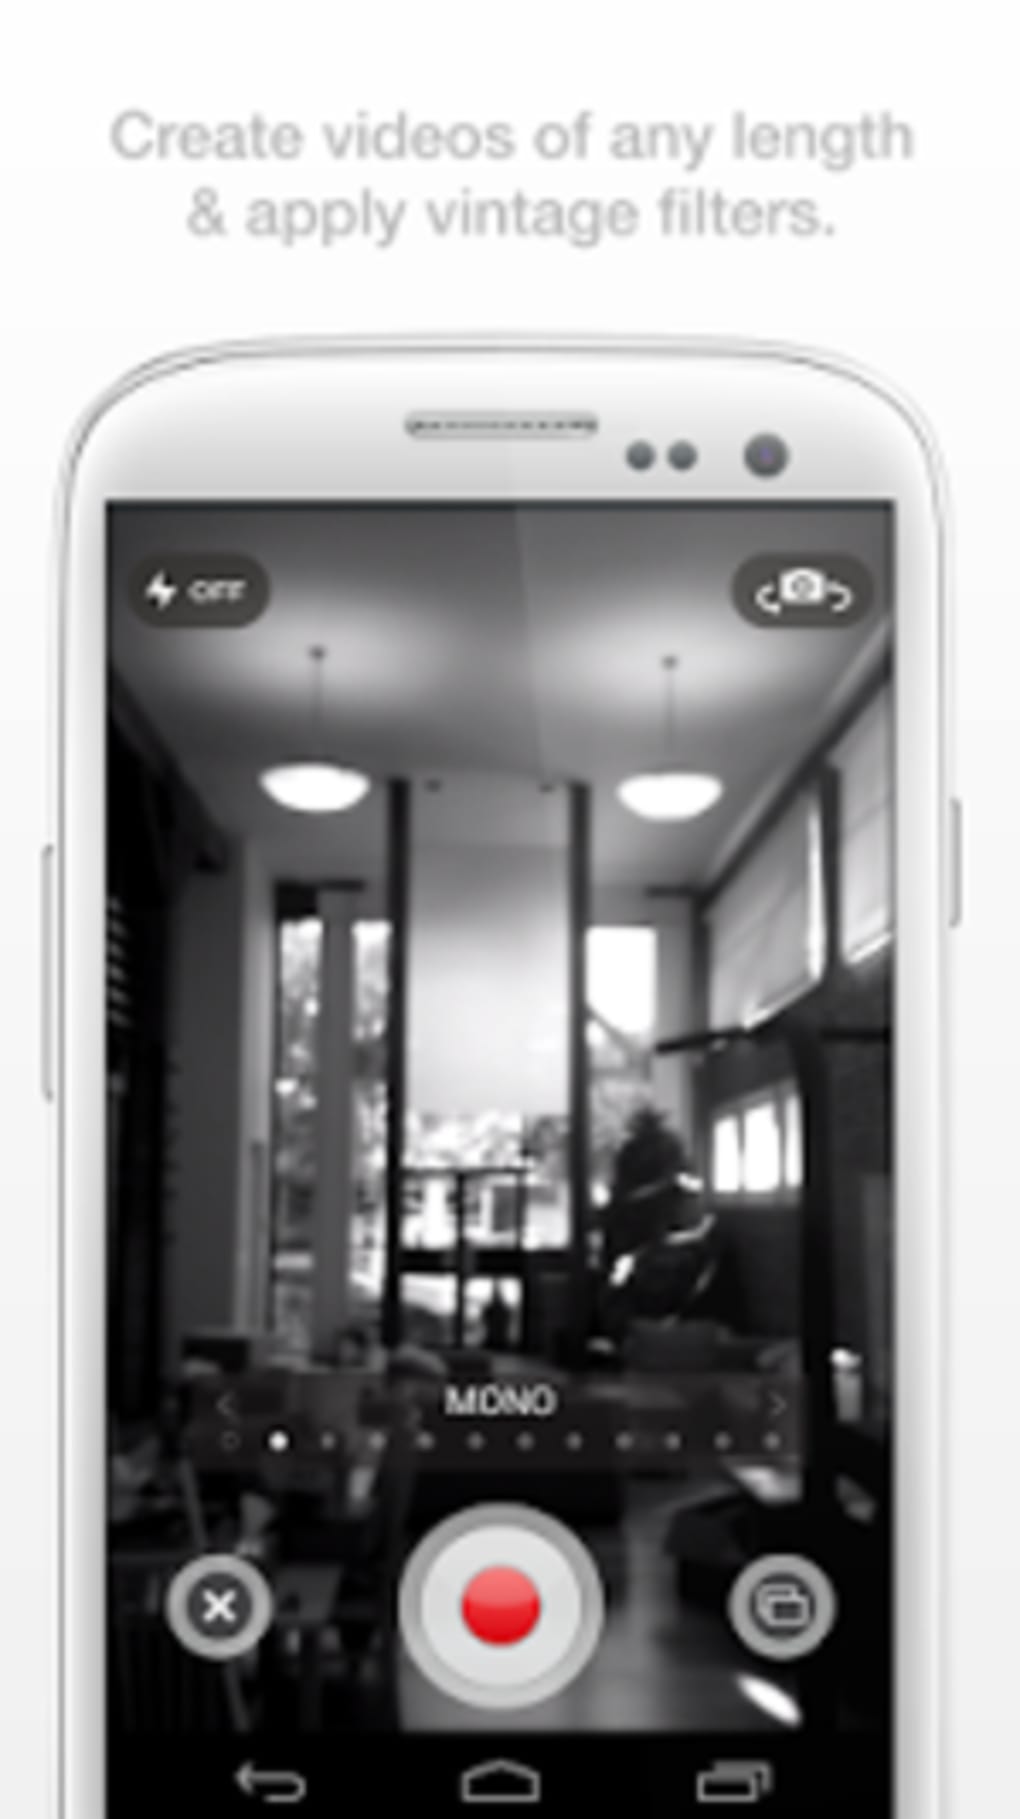 Socialcam video downloader for android mobile